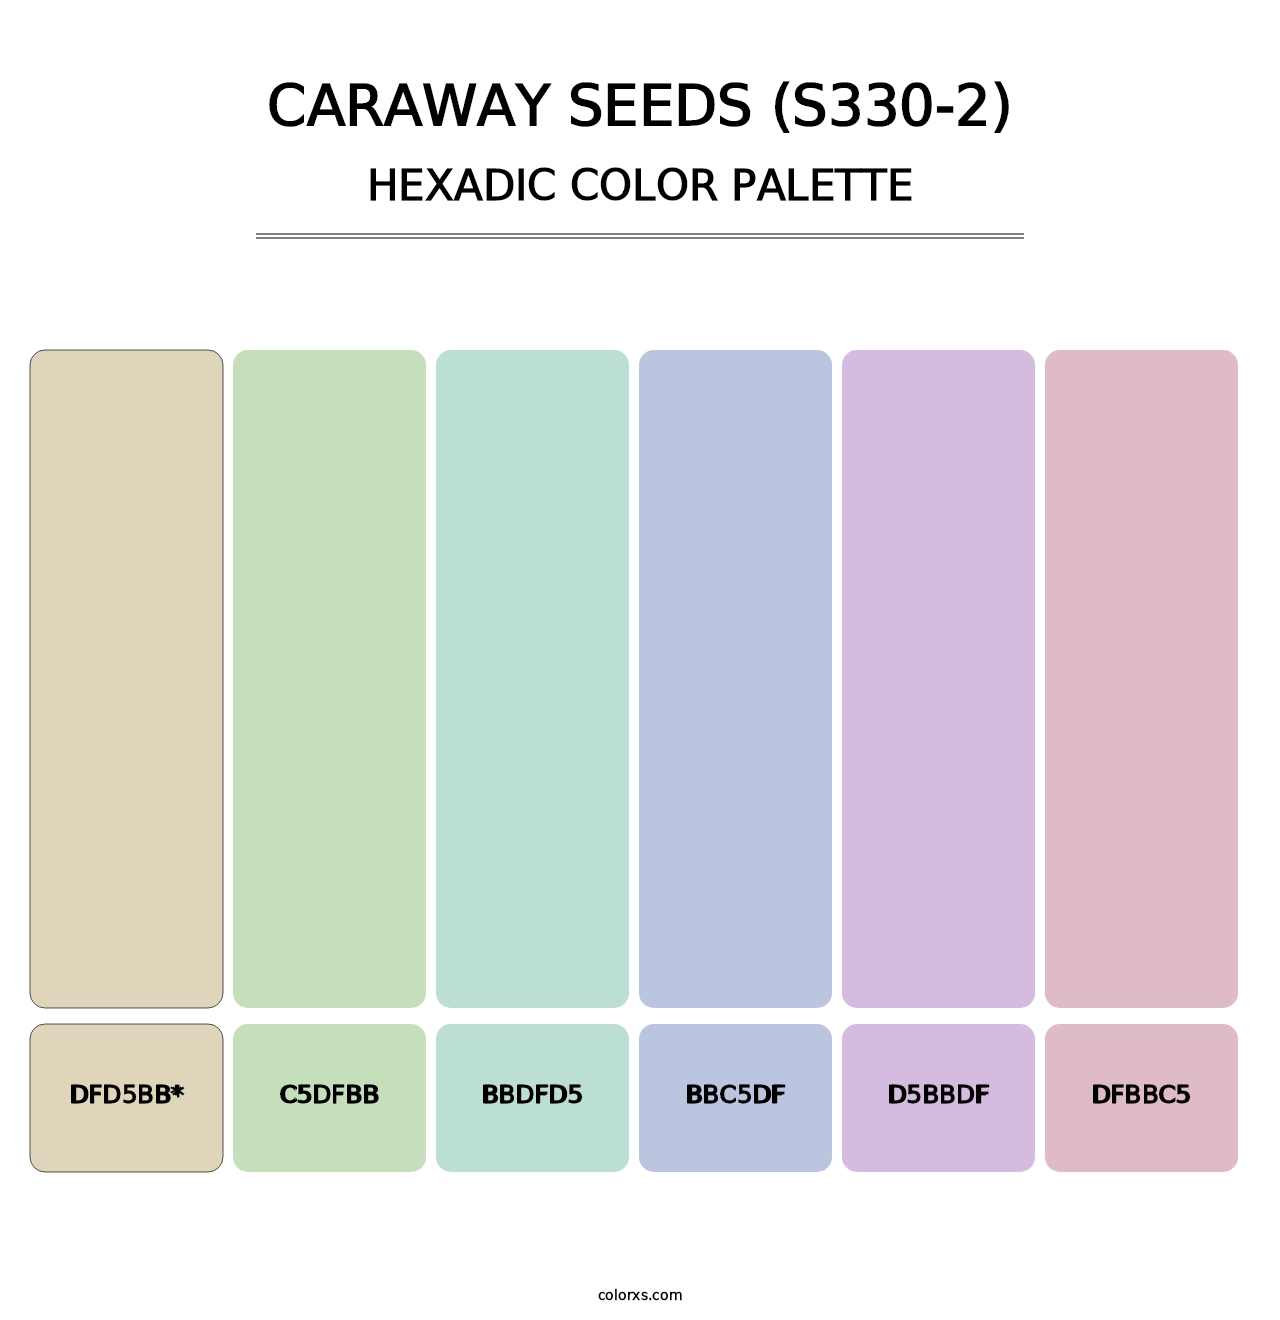 Caraway Seeds (S330-2) - Hexadic Color Palette